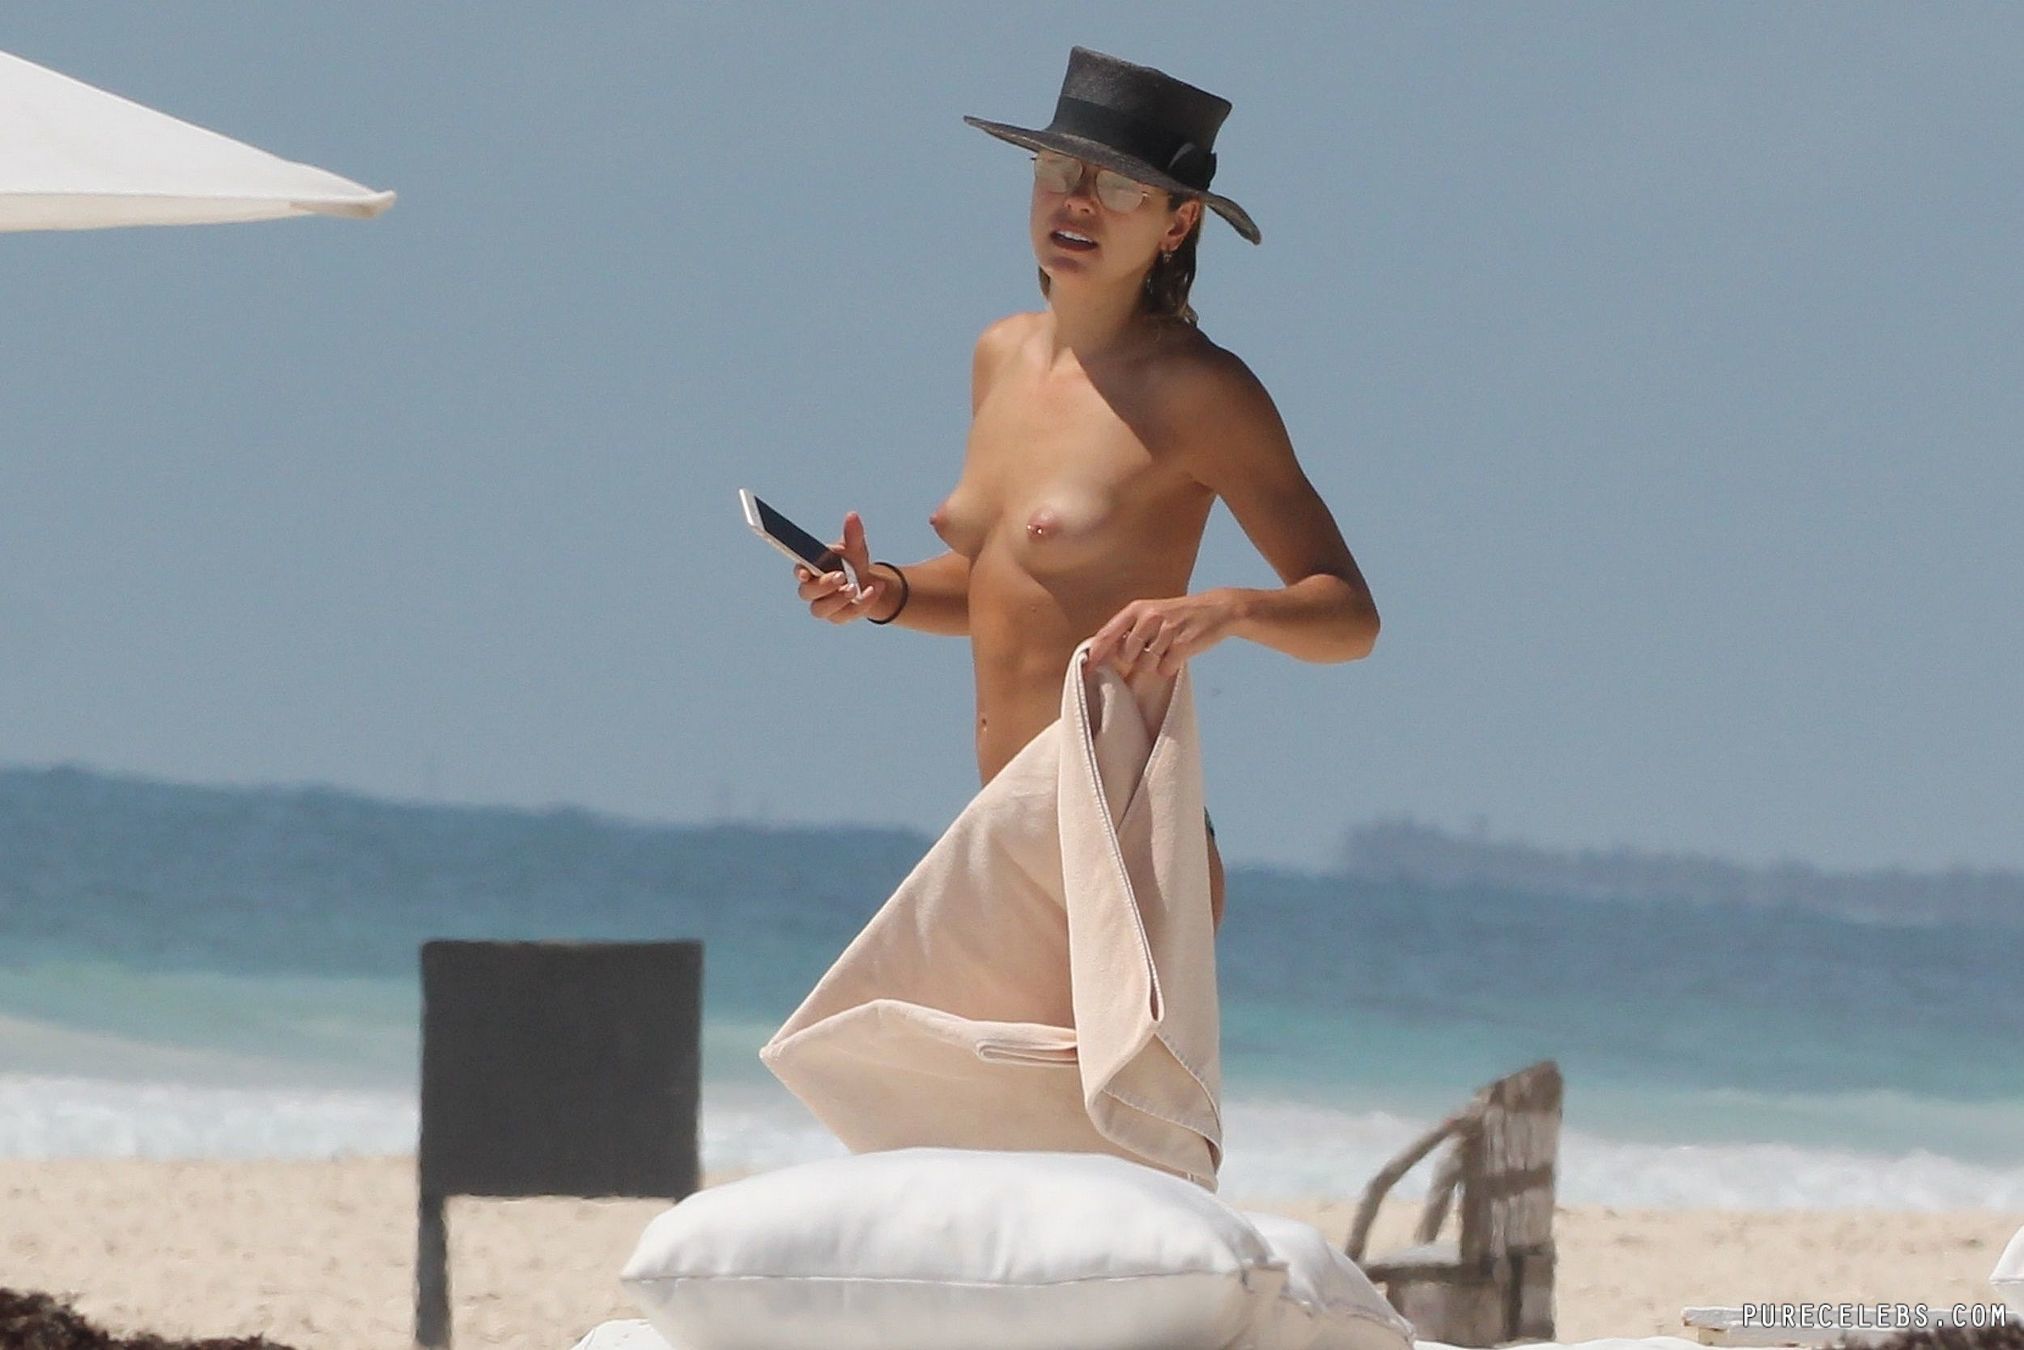 Paparazzi caught Australian model Ashley Hart nude during her beach vacatio...